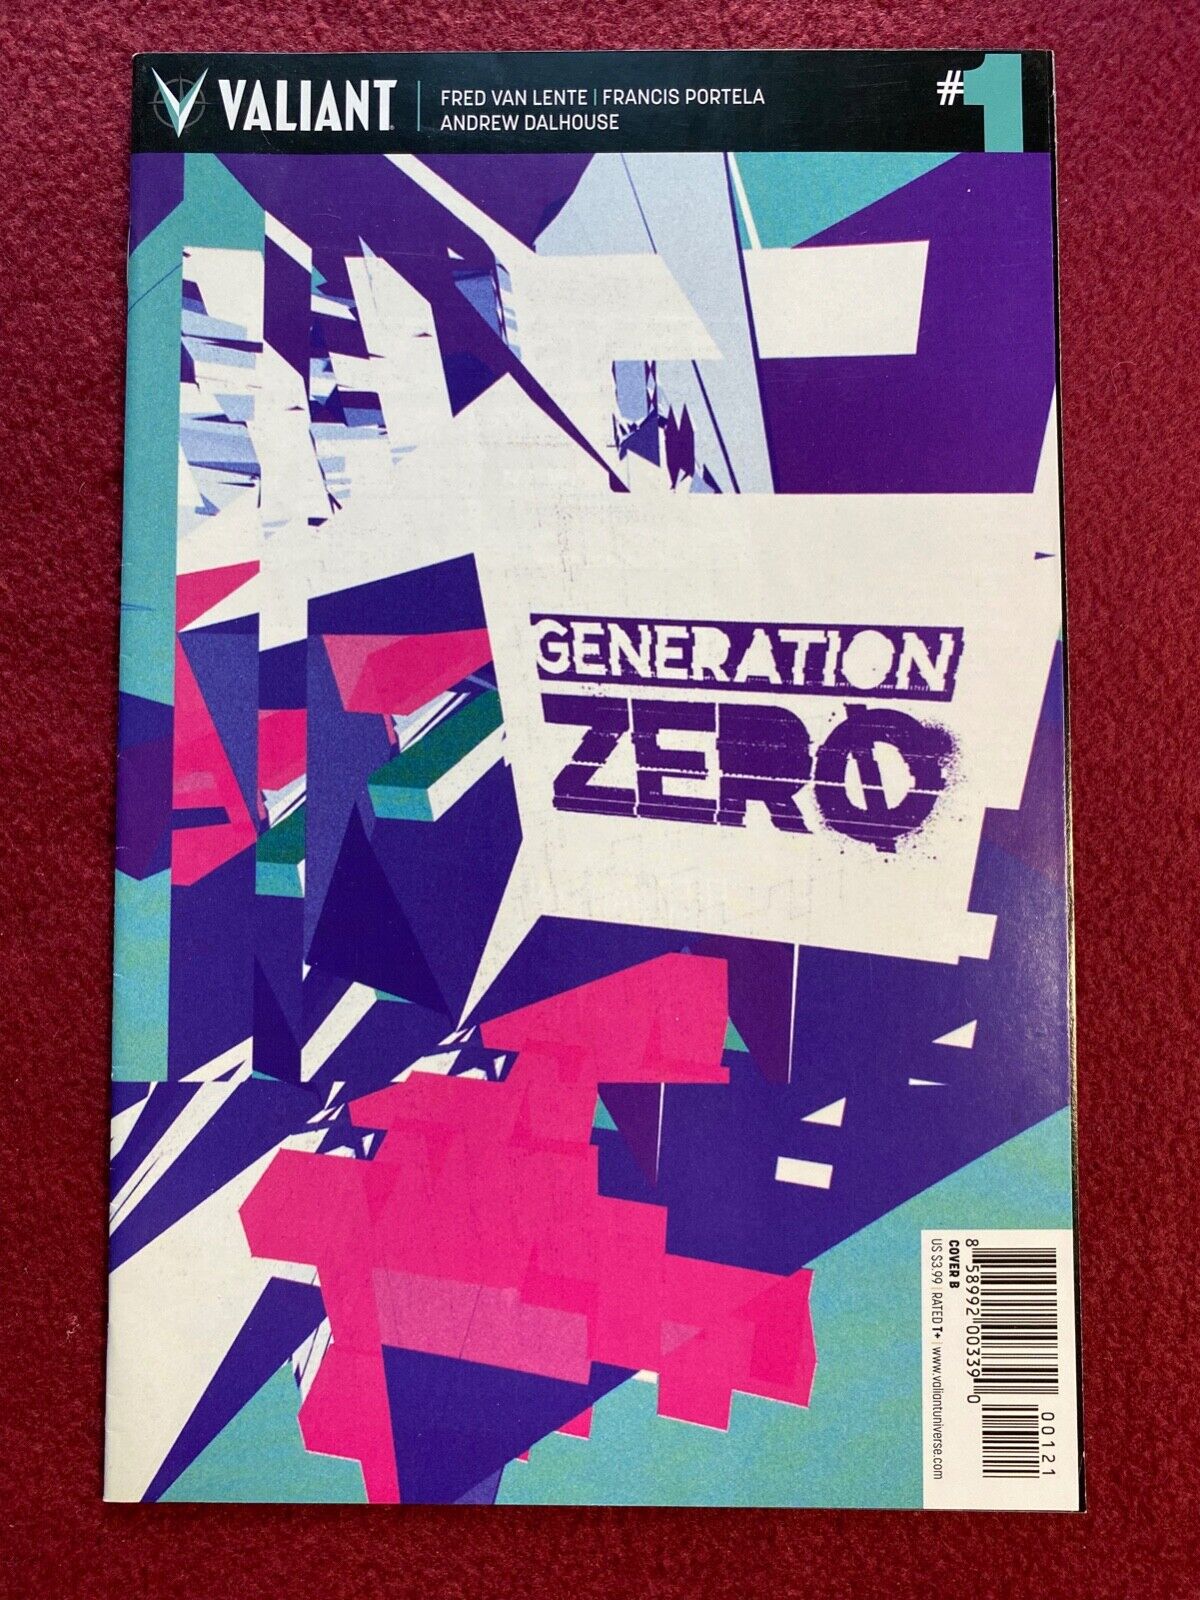 Generation Zero (Valiant) #1B VF/NM; Valiant - Fun Awesome